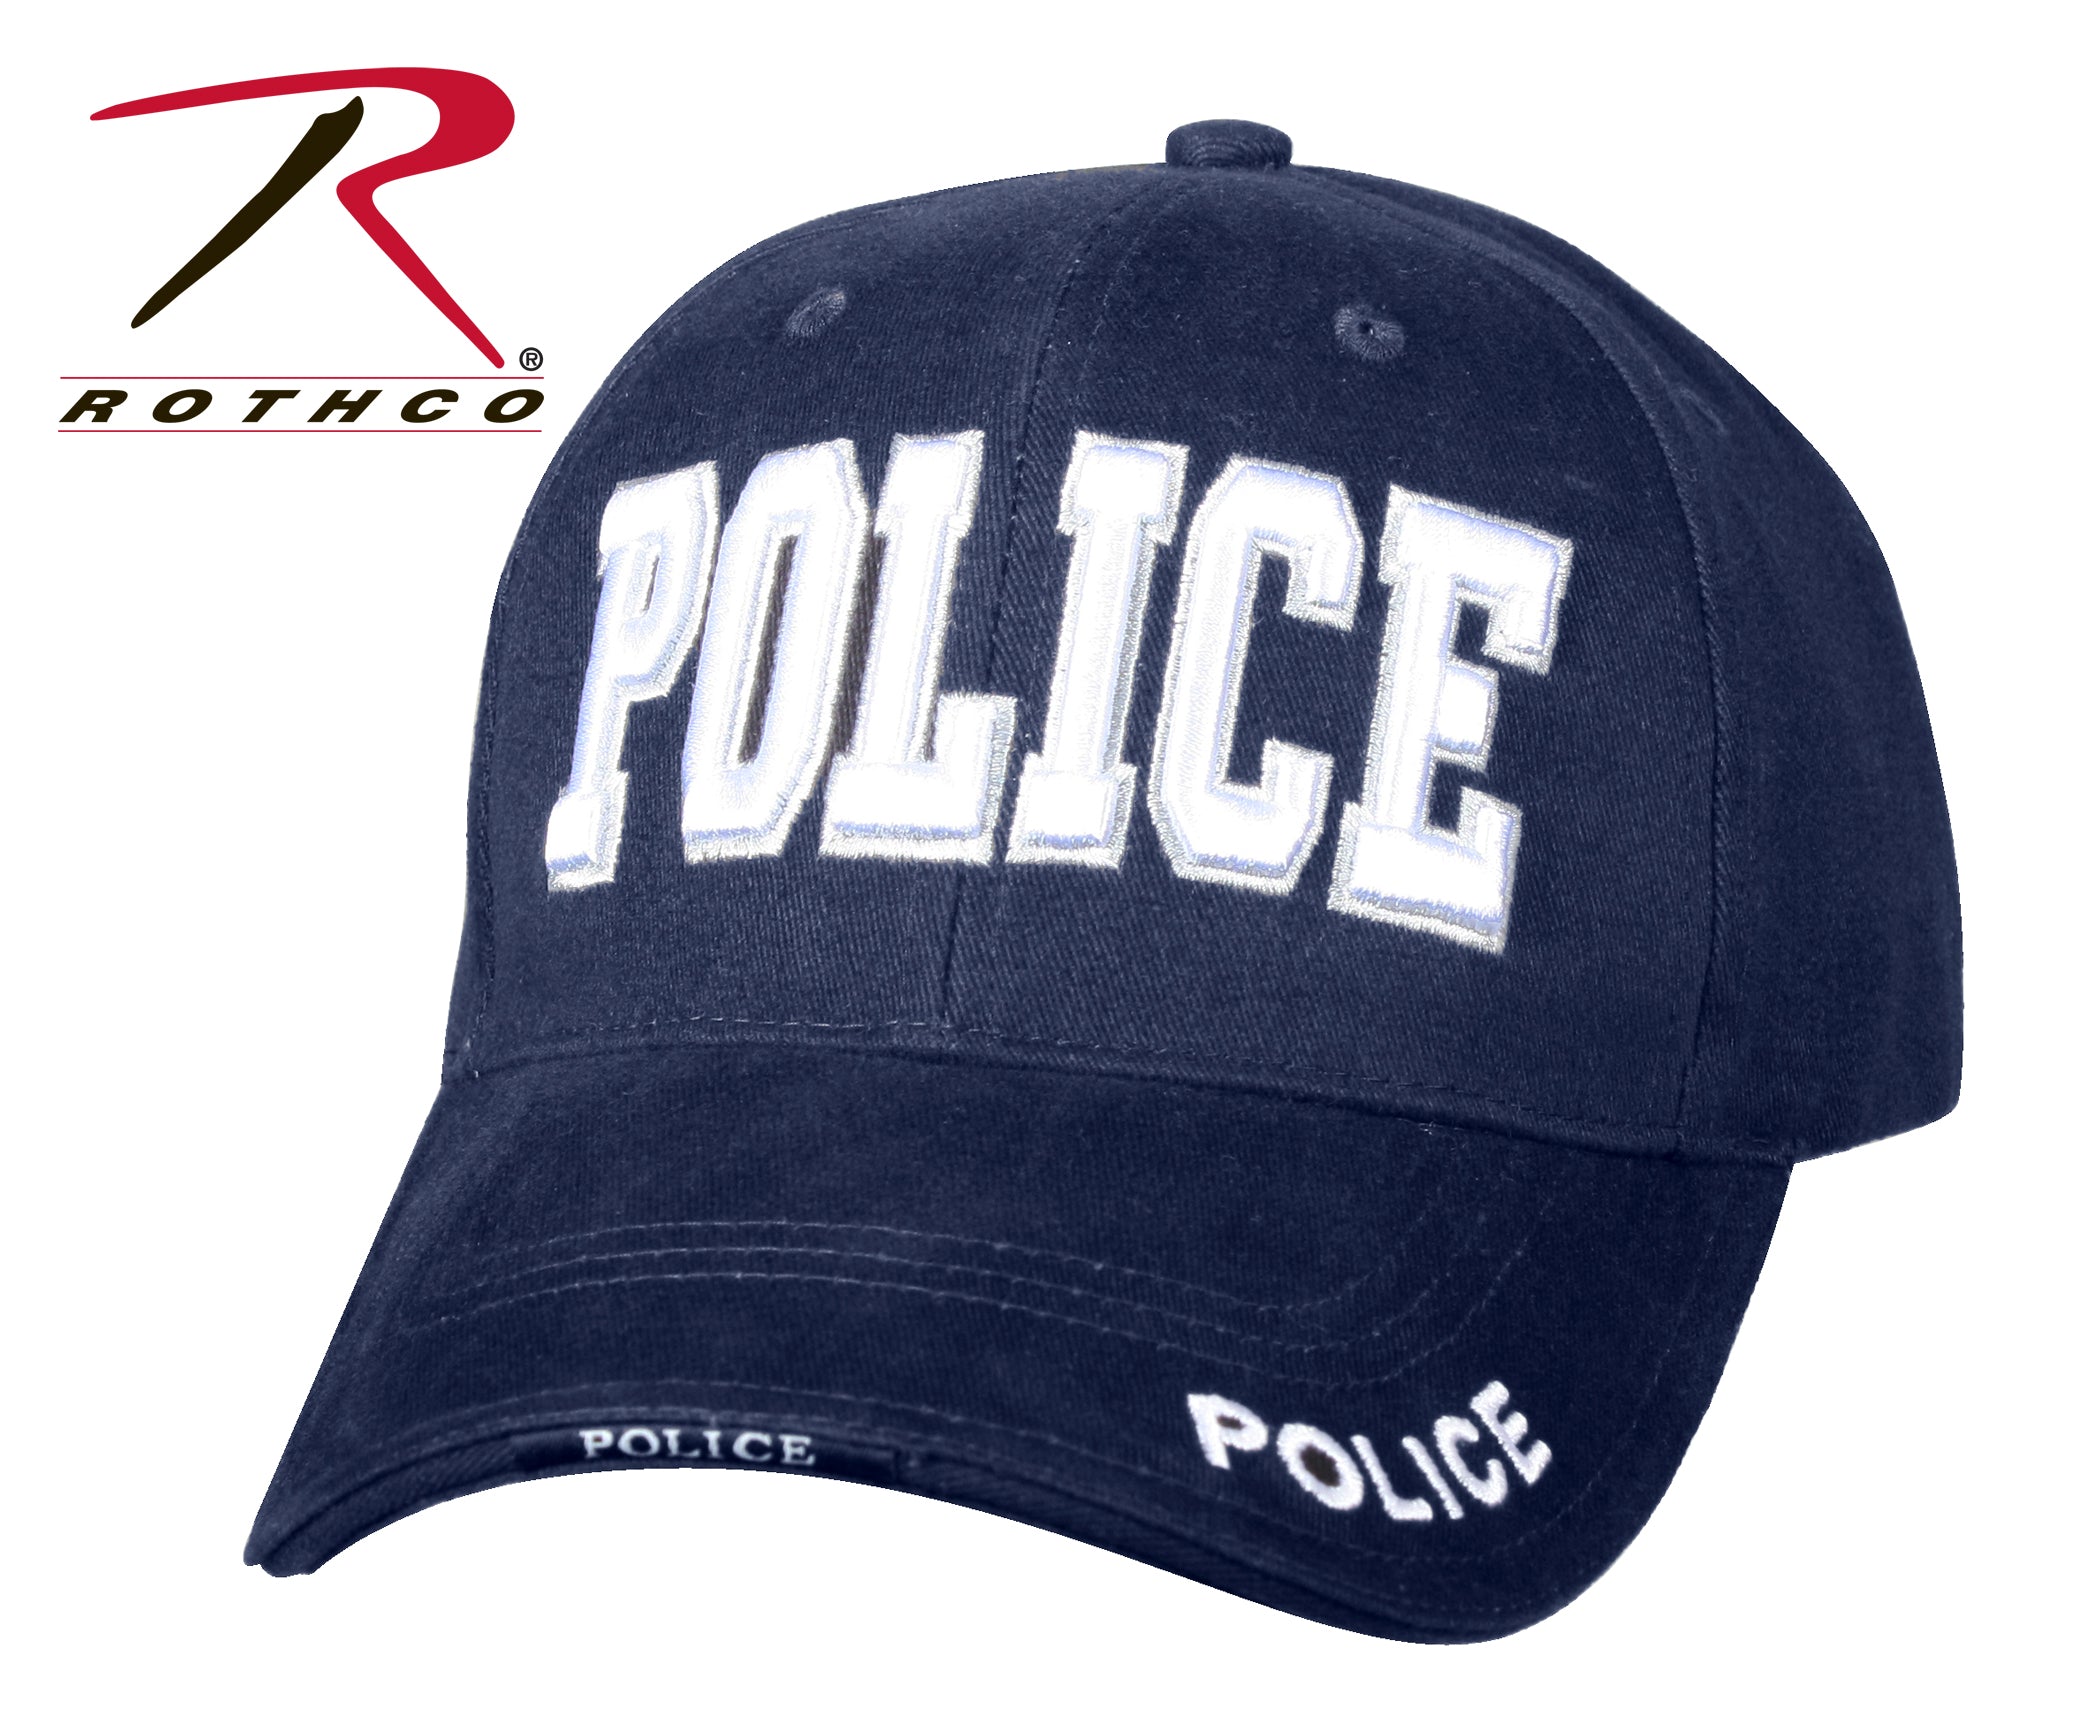 Police Baseball Style Cap - Navy Blue